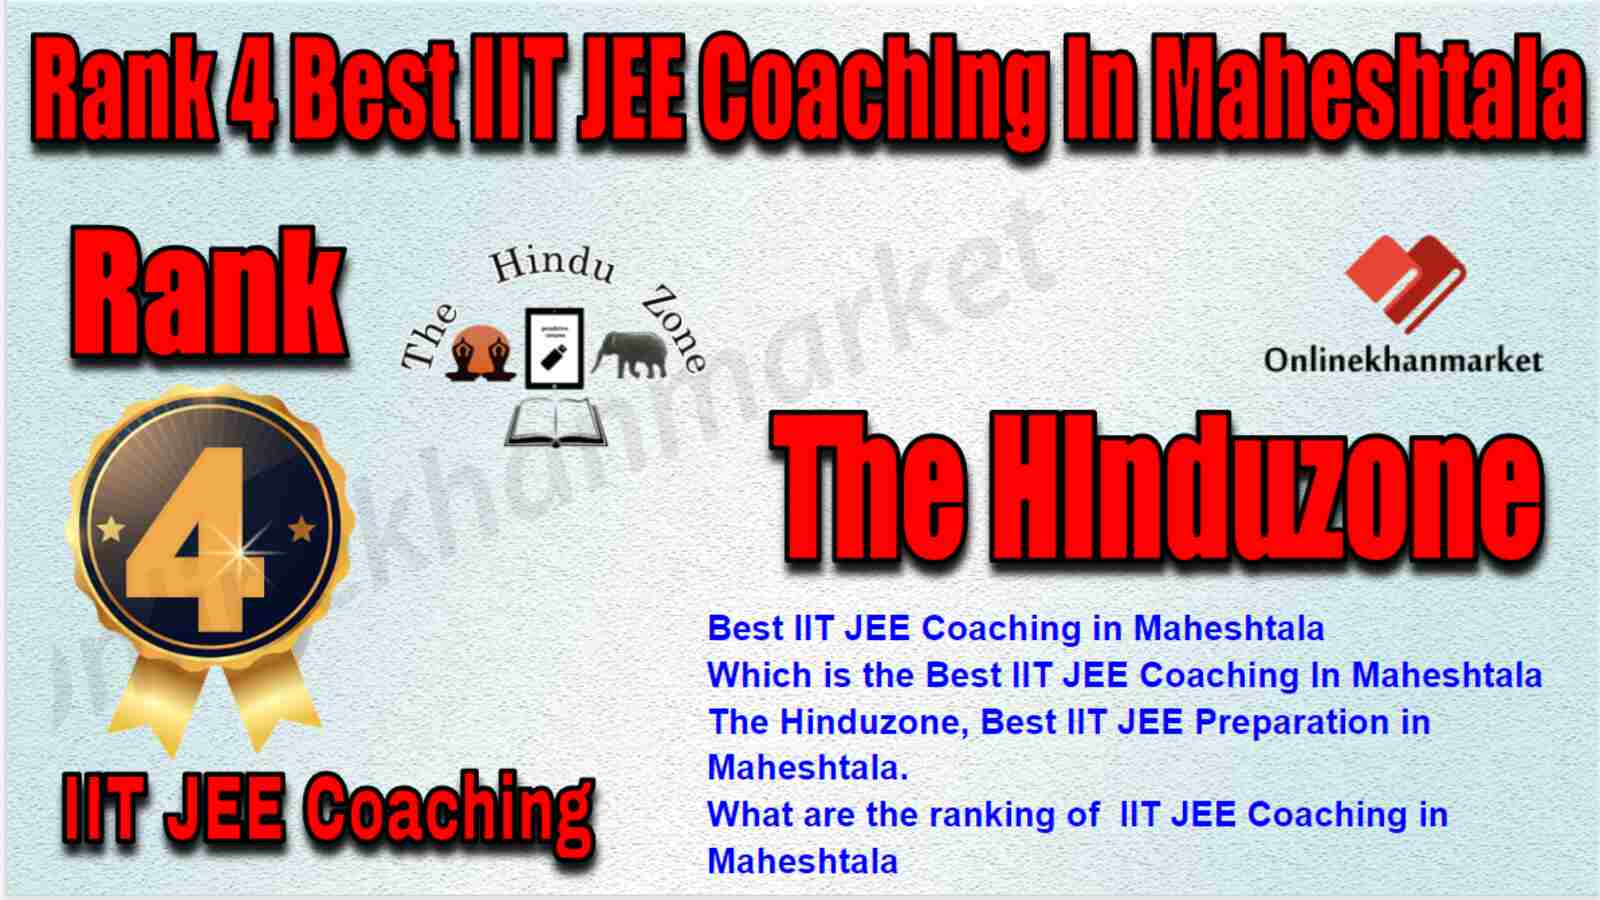 Rank 4 Best IIT JEE Coaching in Maheshtala